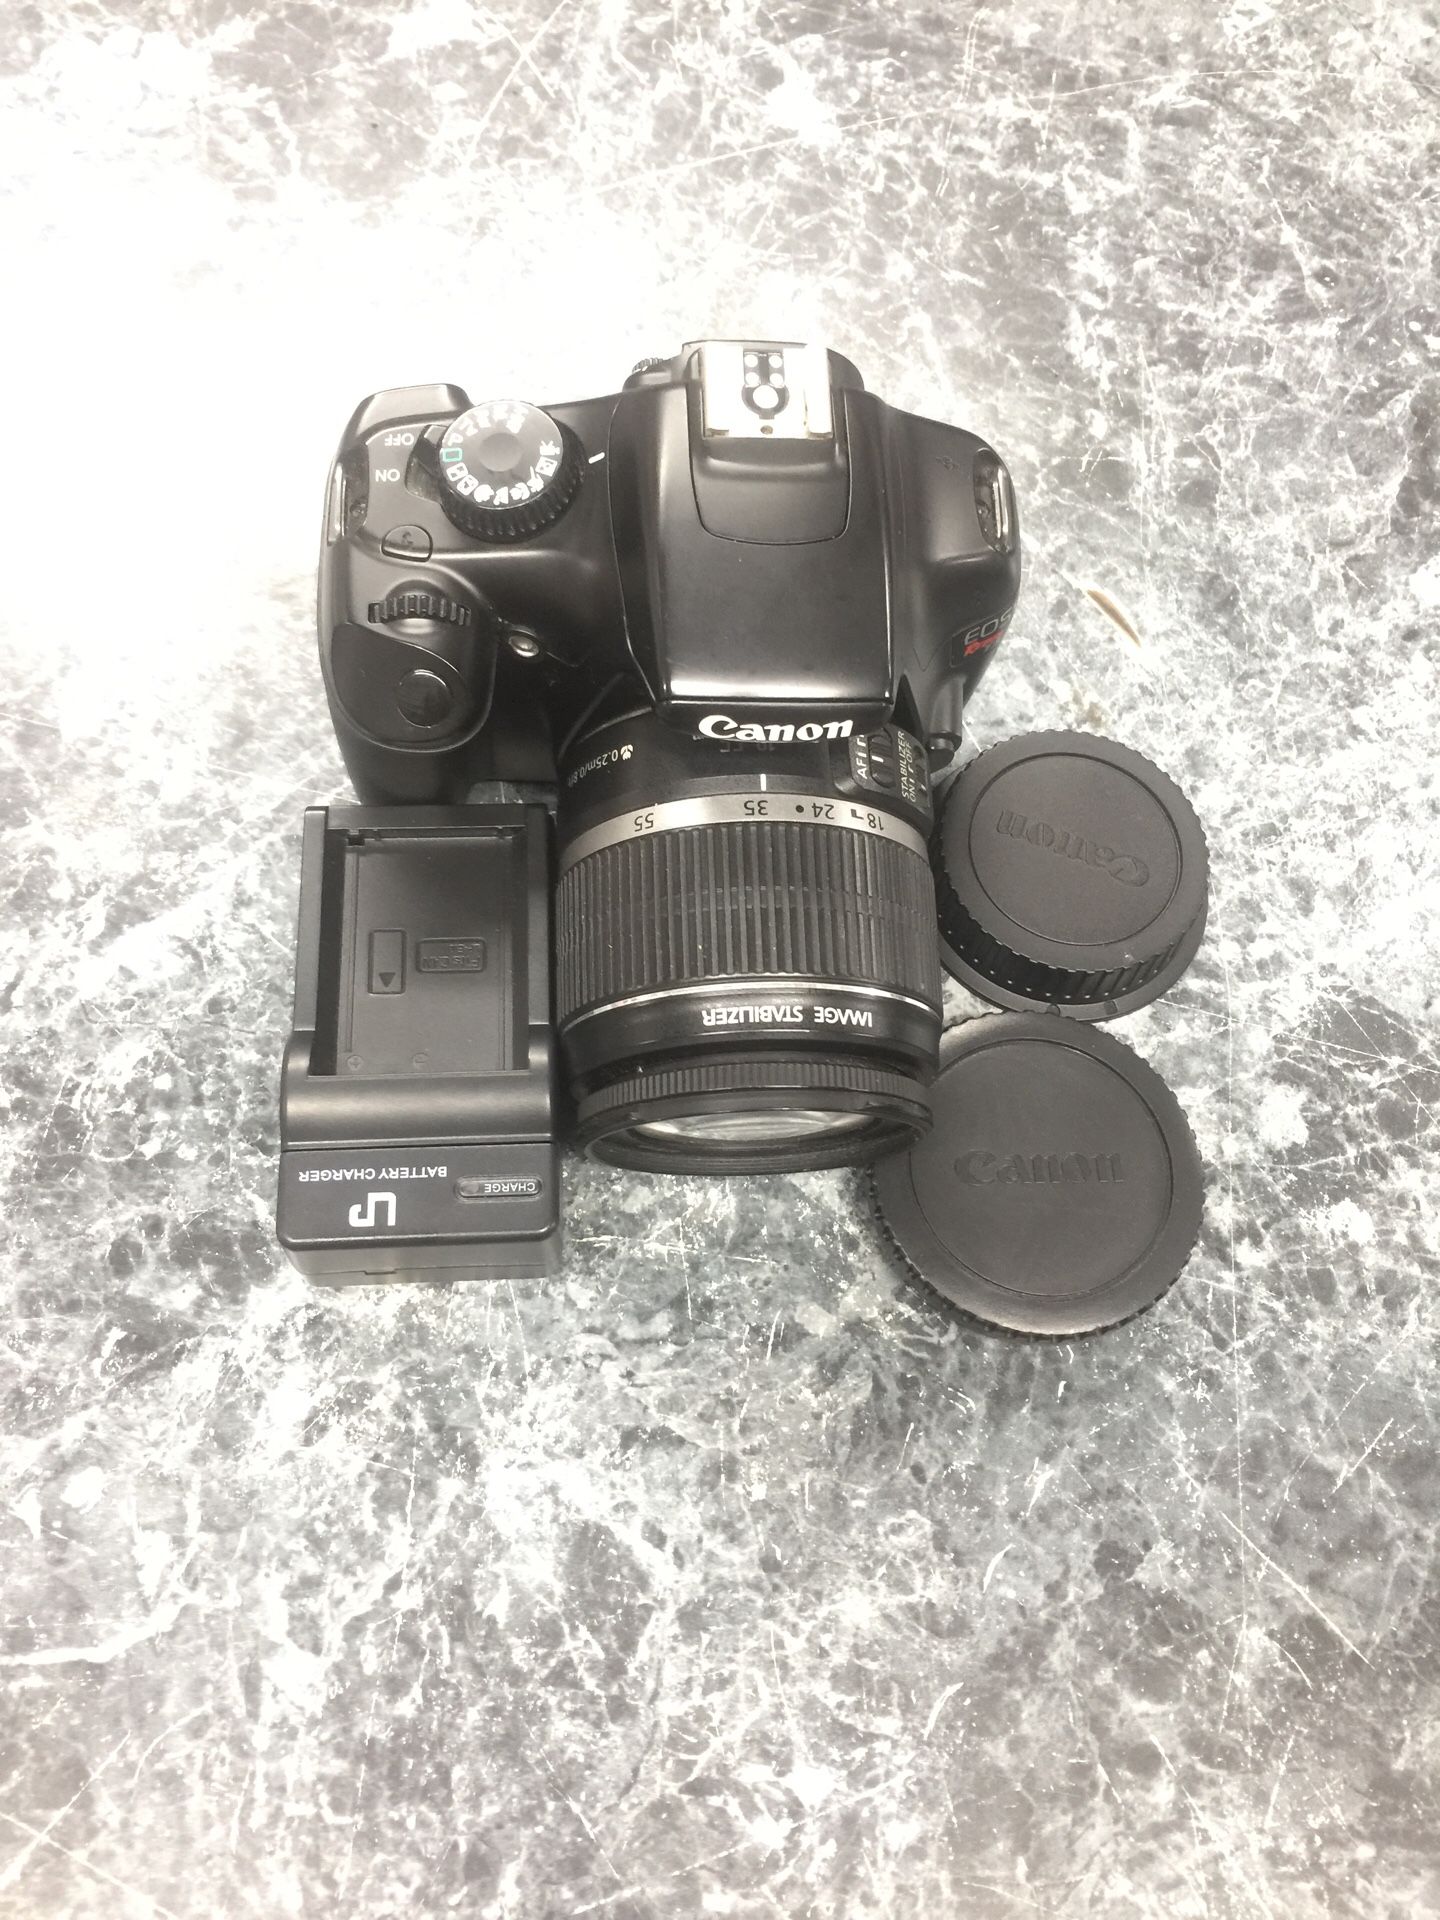 Canon T3 camera with accessories